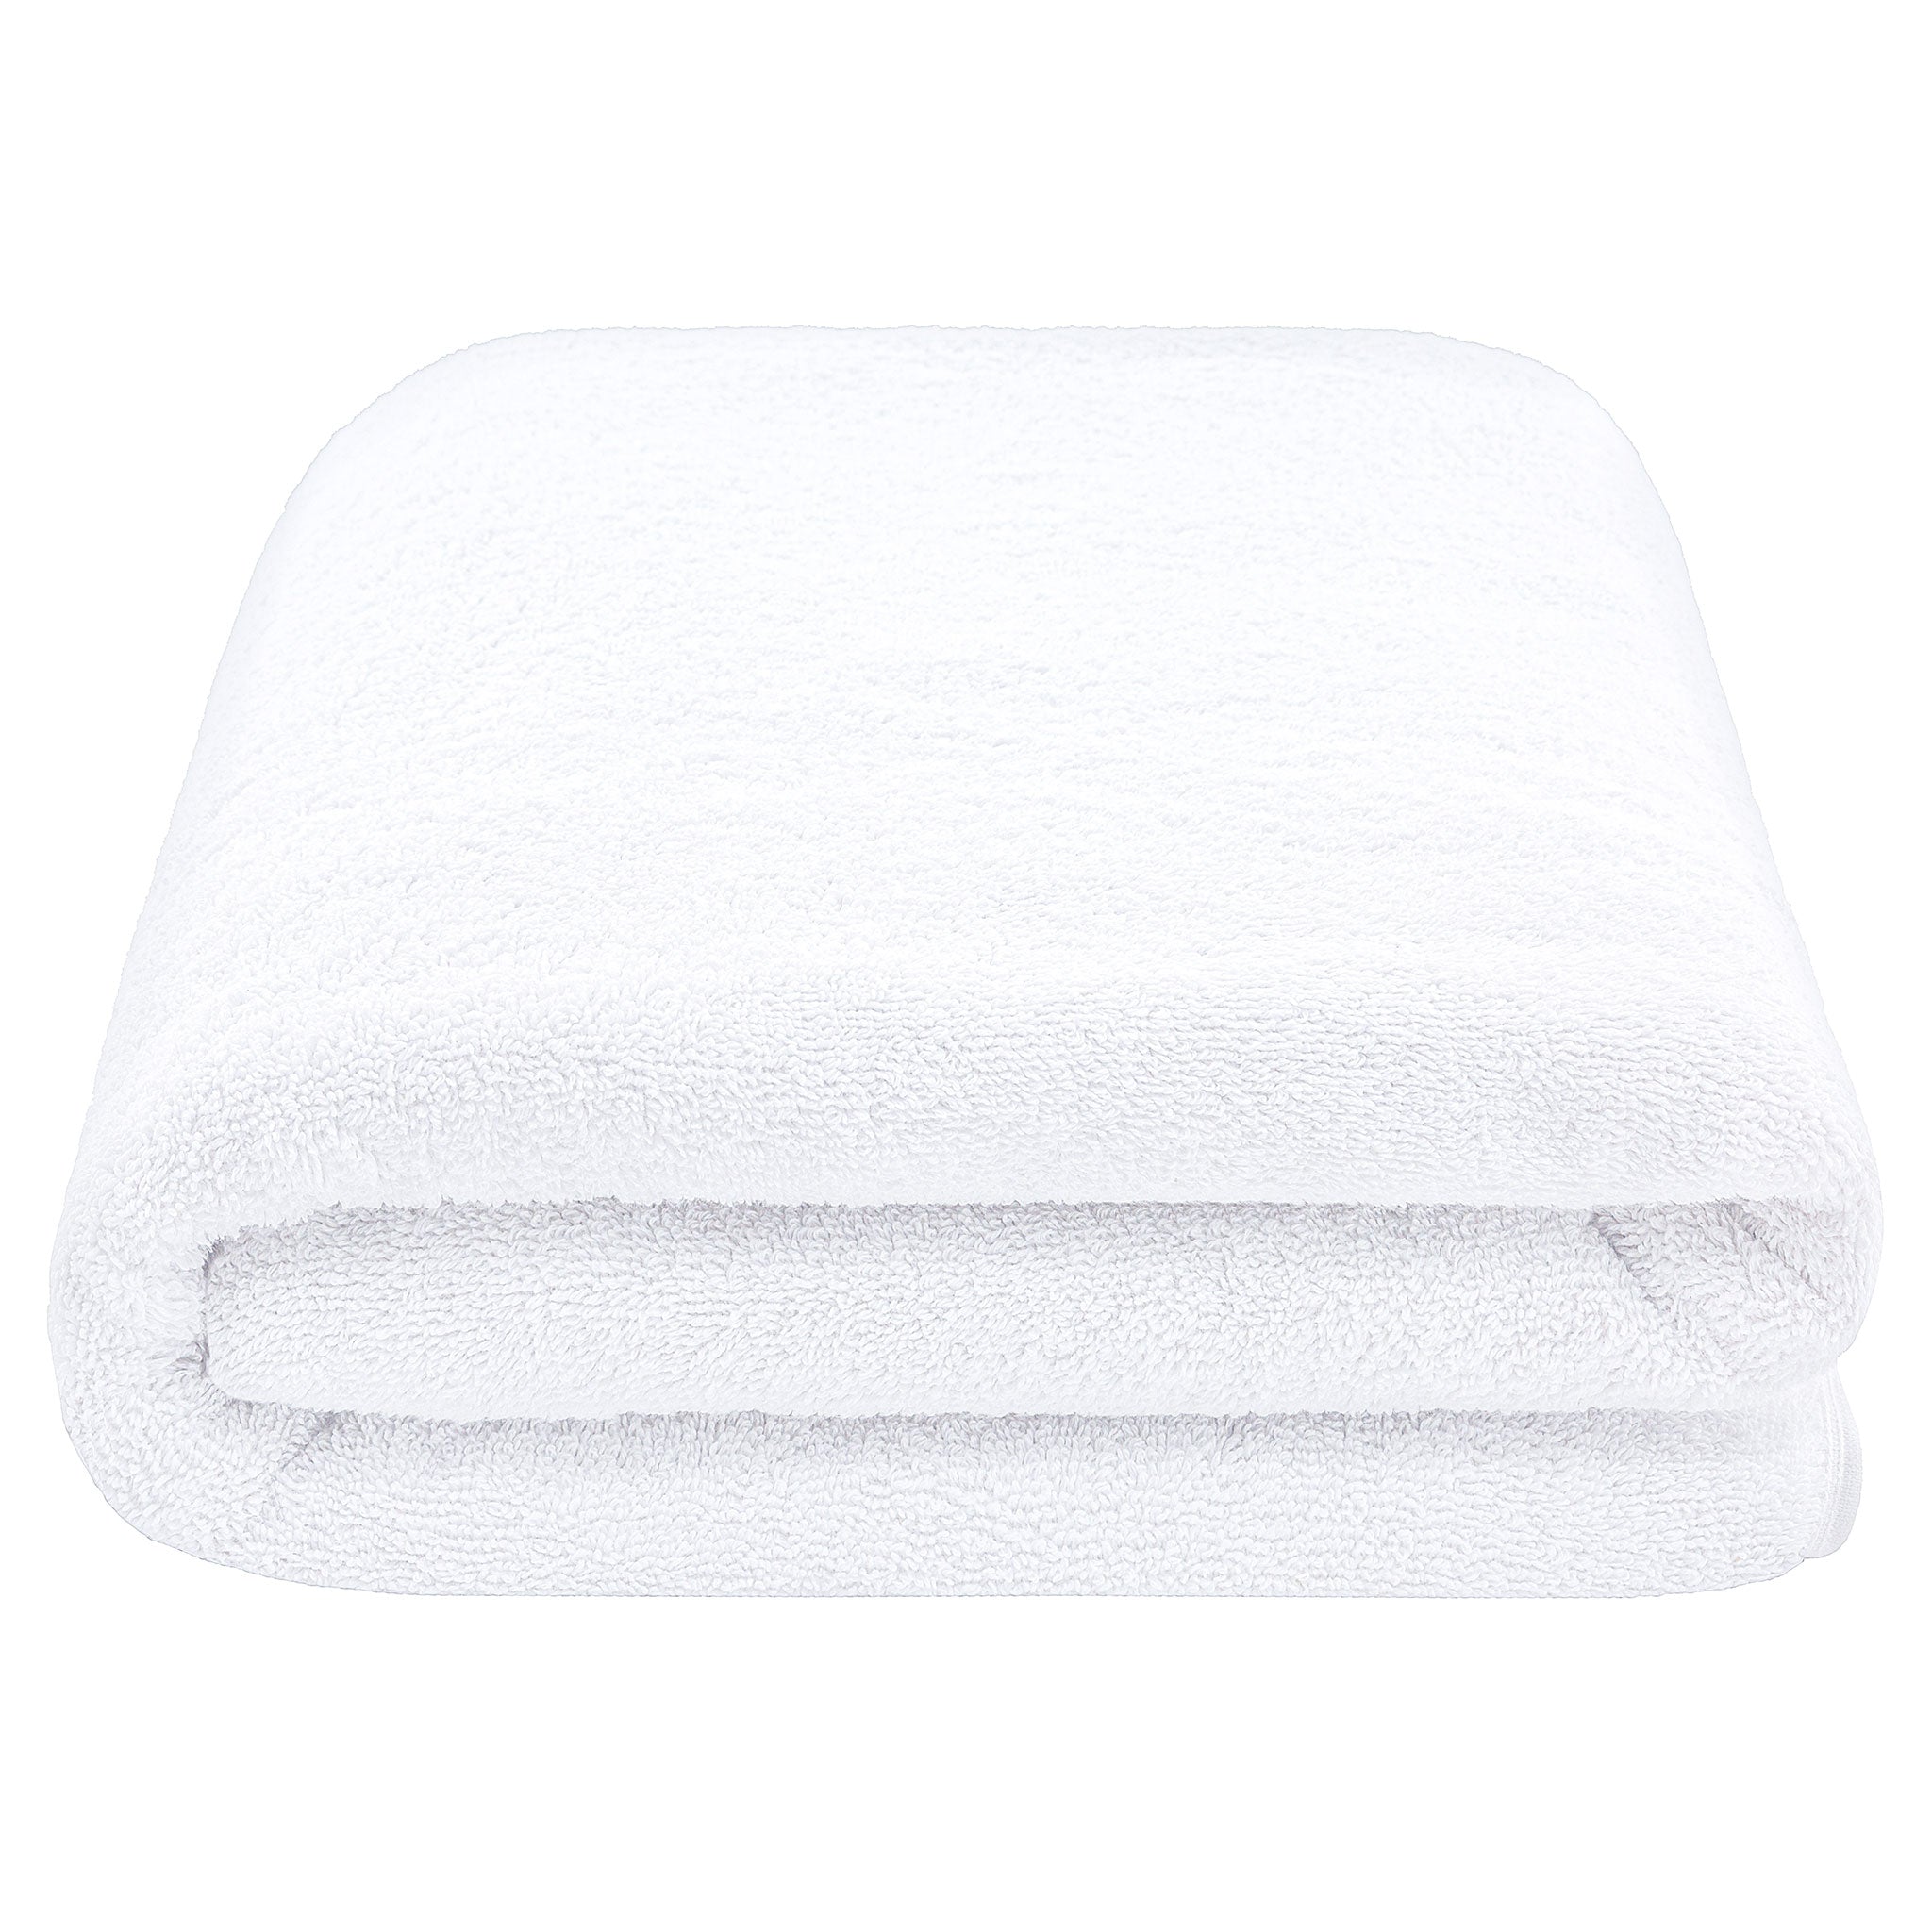 American Soft Linen - 40x80 Inch Oversized Bath Sheet Turkish Bath Towel - 12 Piece Case Pack - White - 3